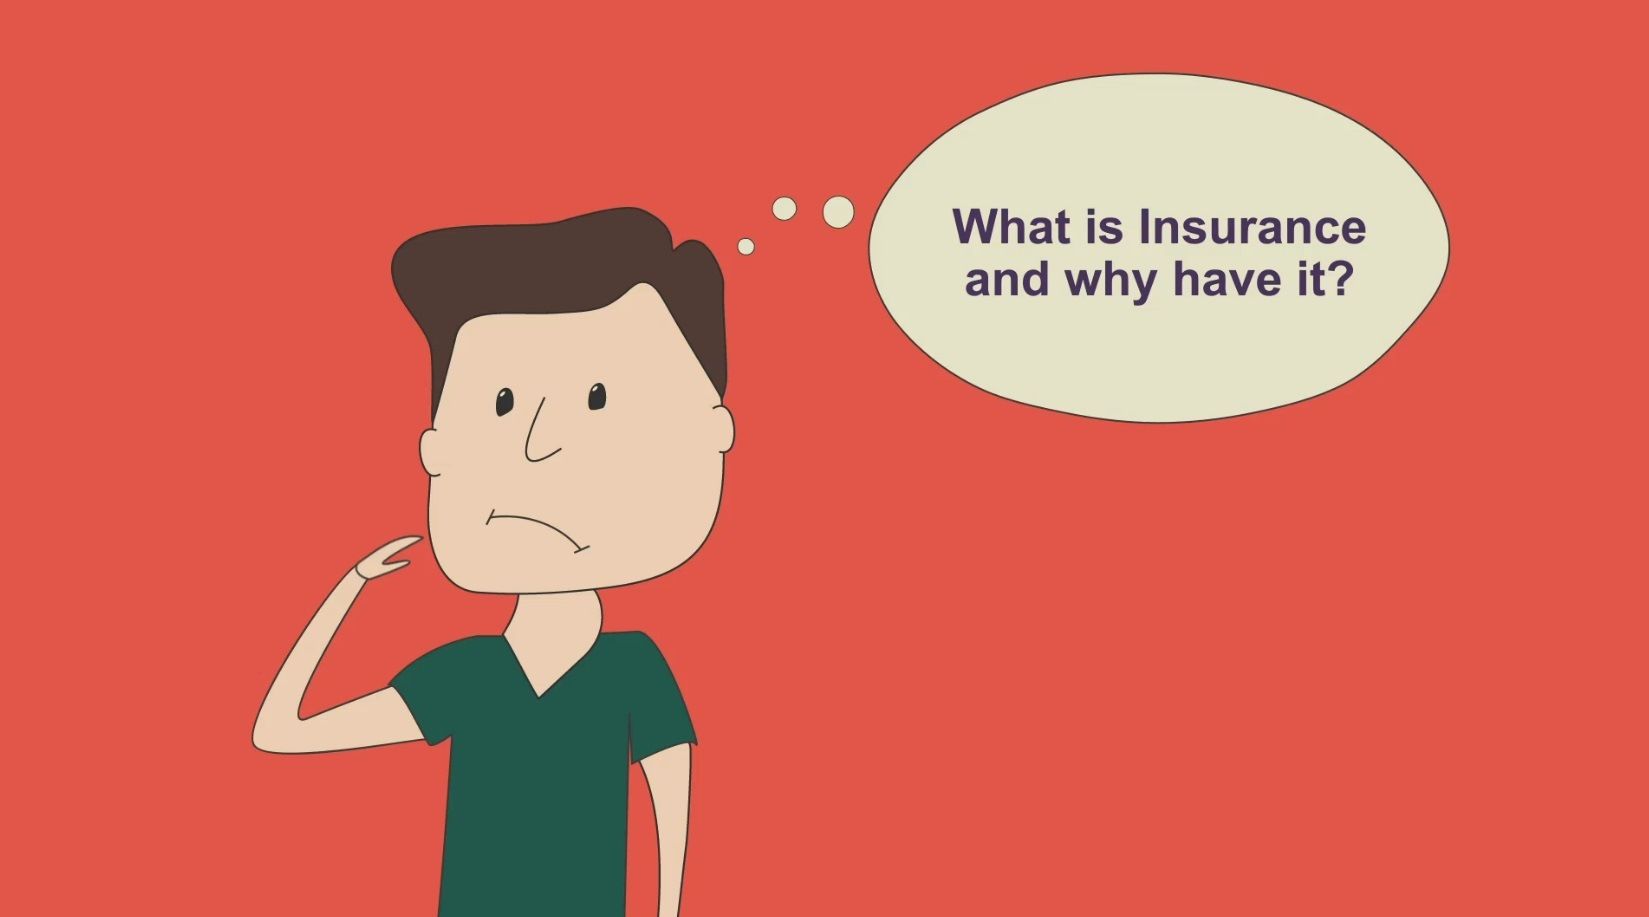 Cartoon insurance - Cartoon insurance